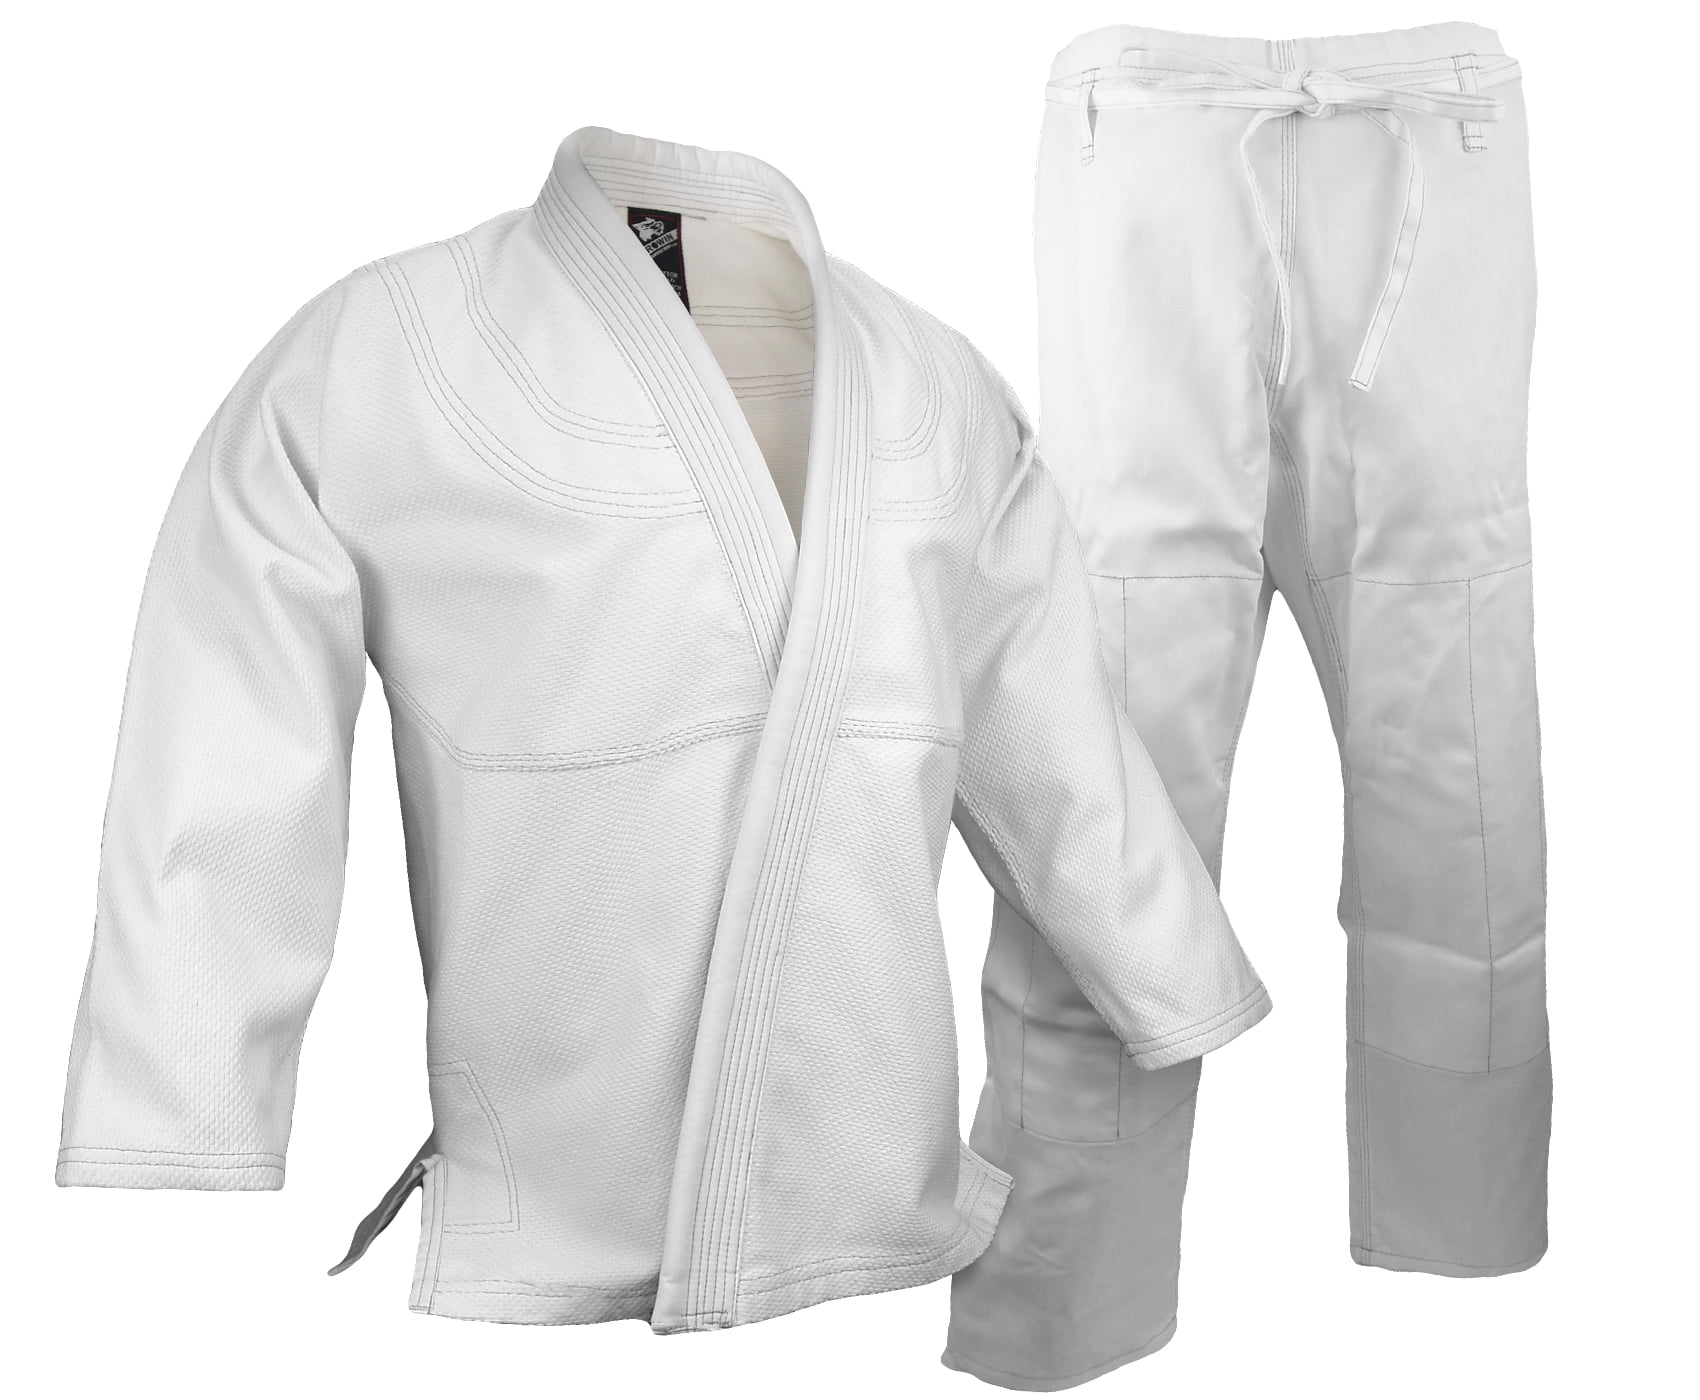 New Arrival Shoyoroll Cut Professional Jiu Jitsu Uniform Custom Made BJJ Gi's 